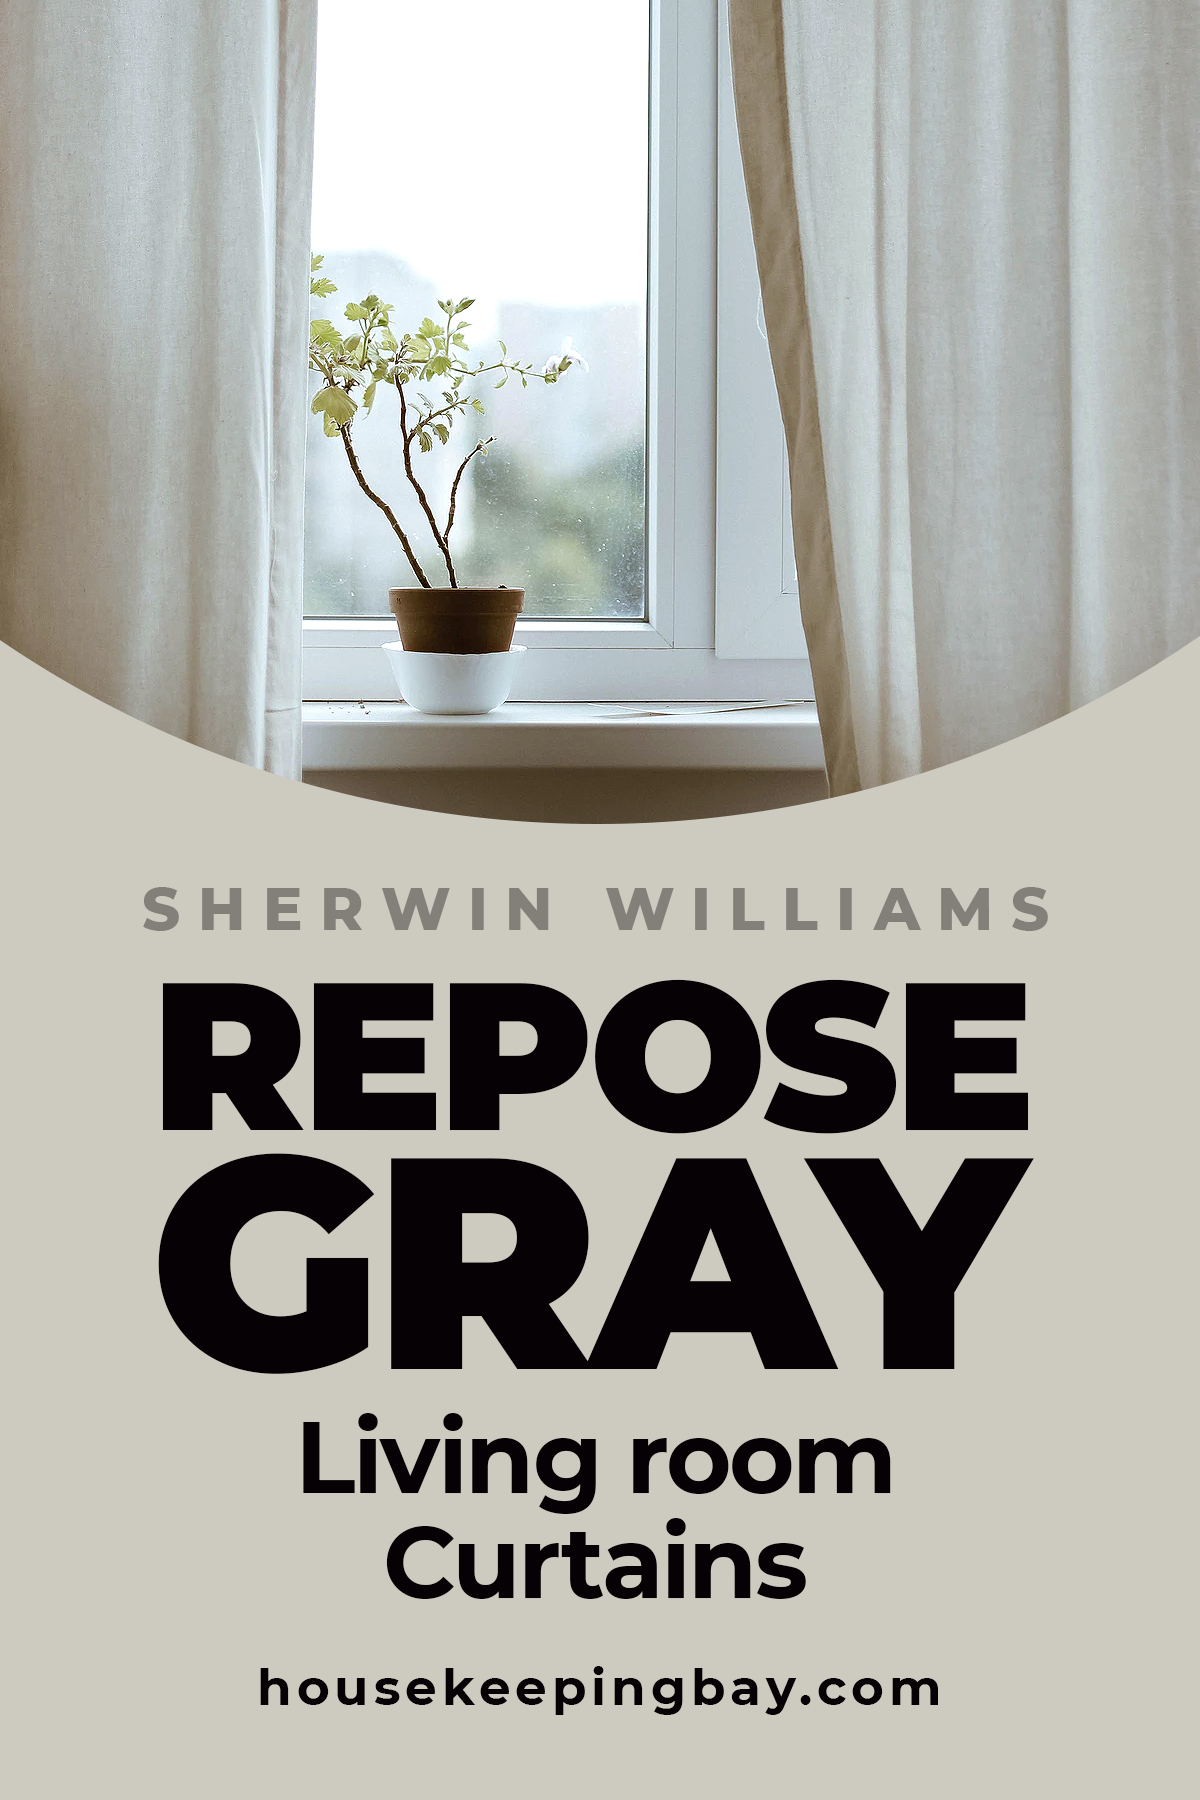 Repose Gray living room curtains